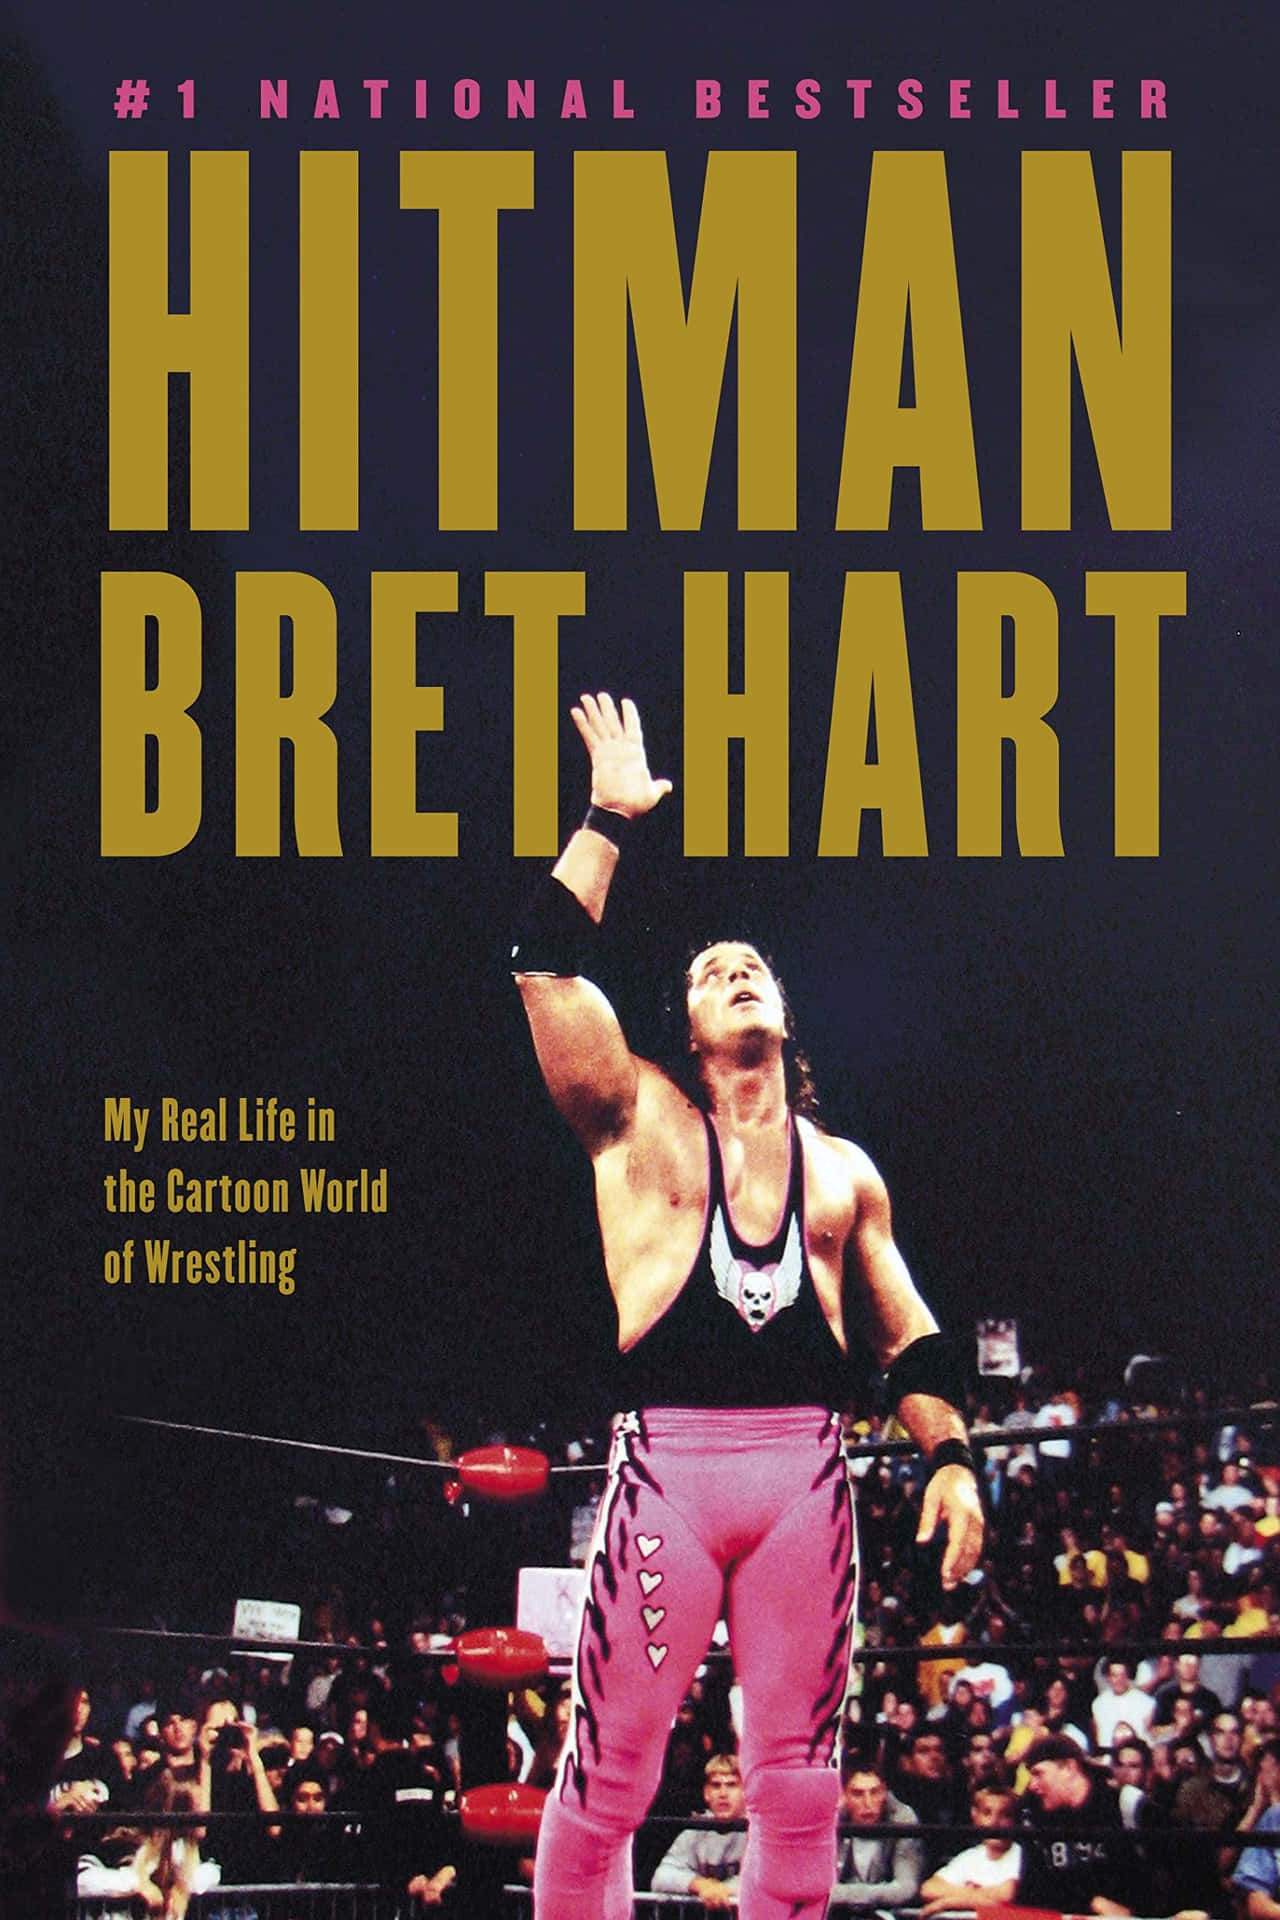 Bret Hart Hitman Book Cover Wallpaper